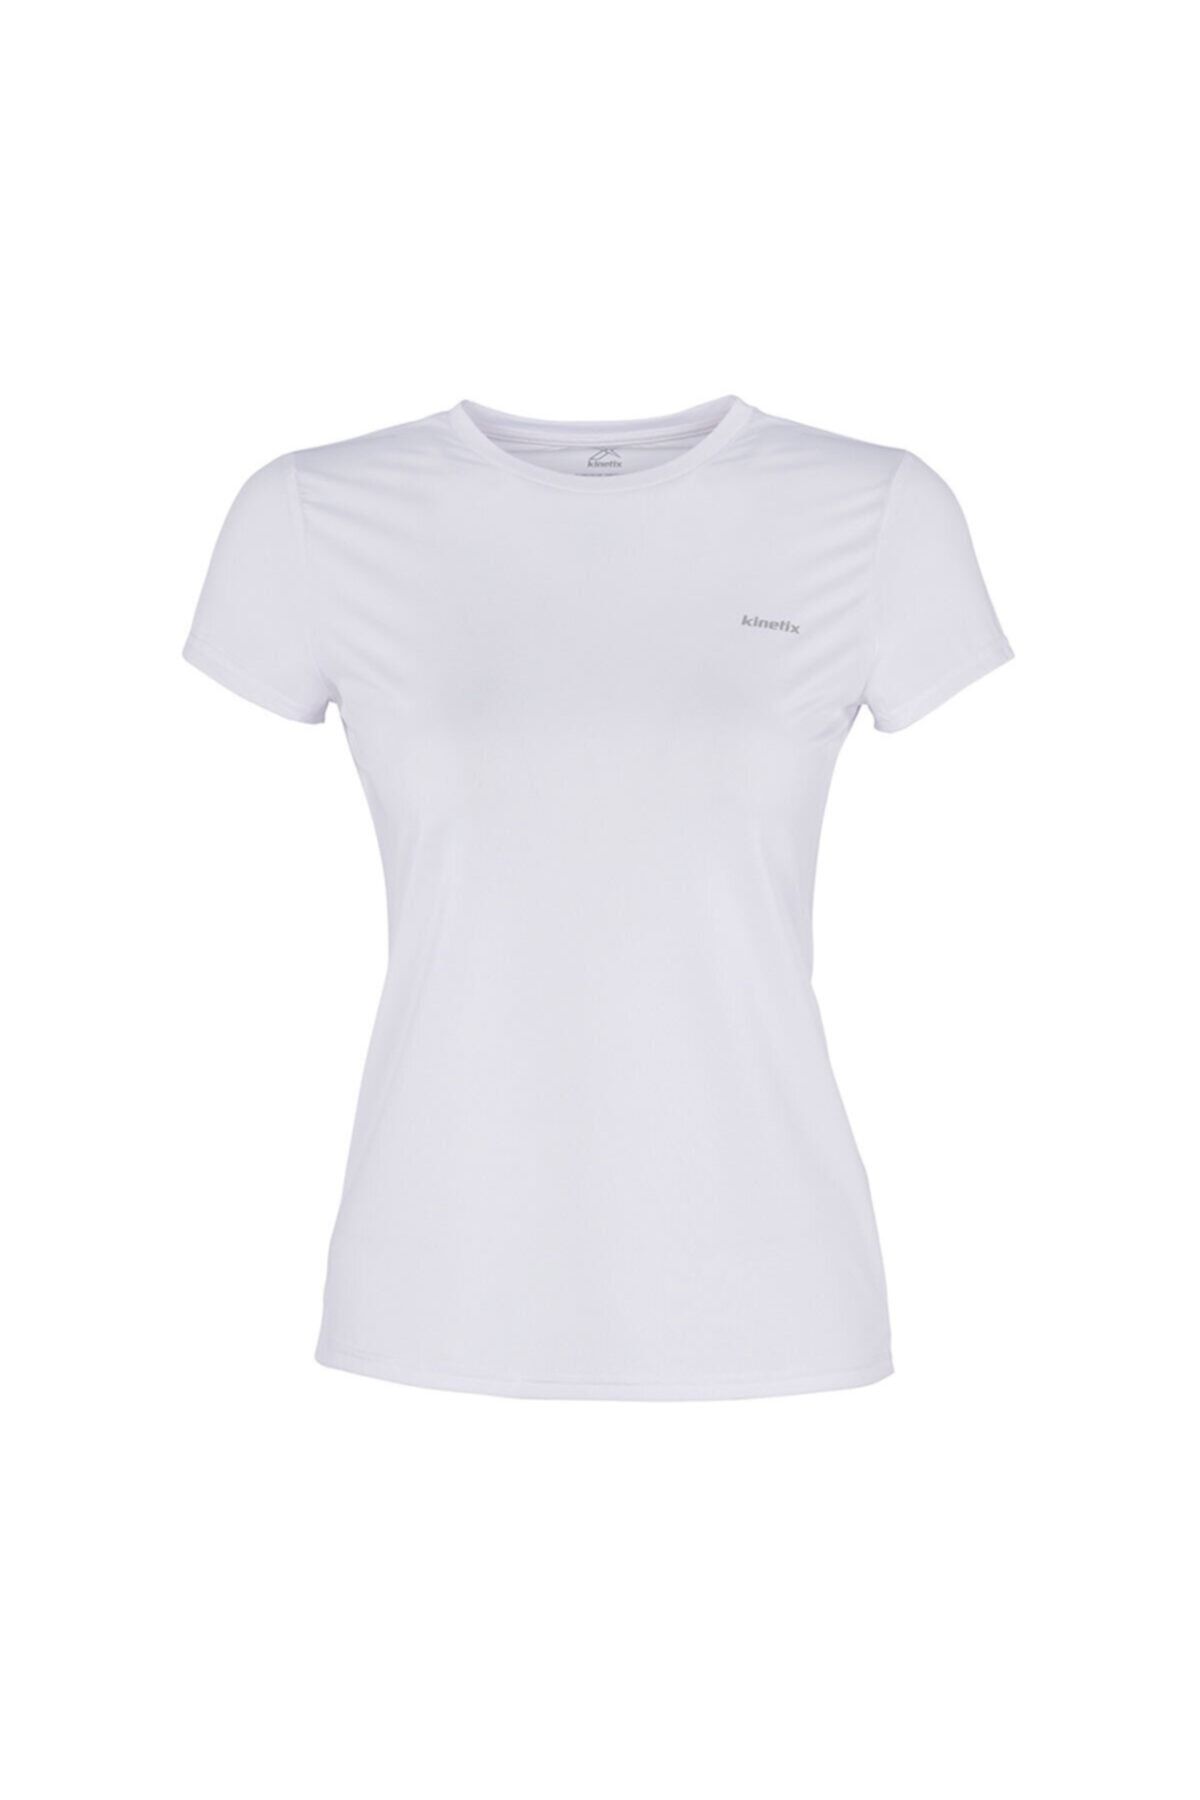 Kinetix BASIC PES C NECK T-SHIRT Beyaz Kadın T-Shirt 100559587